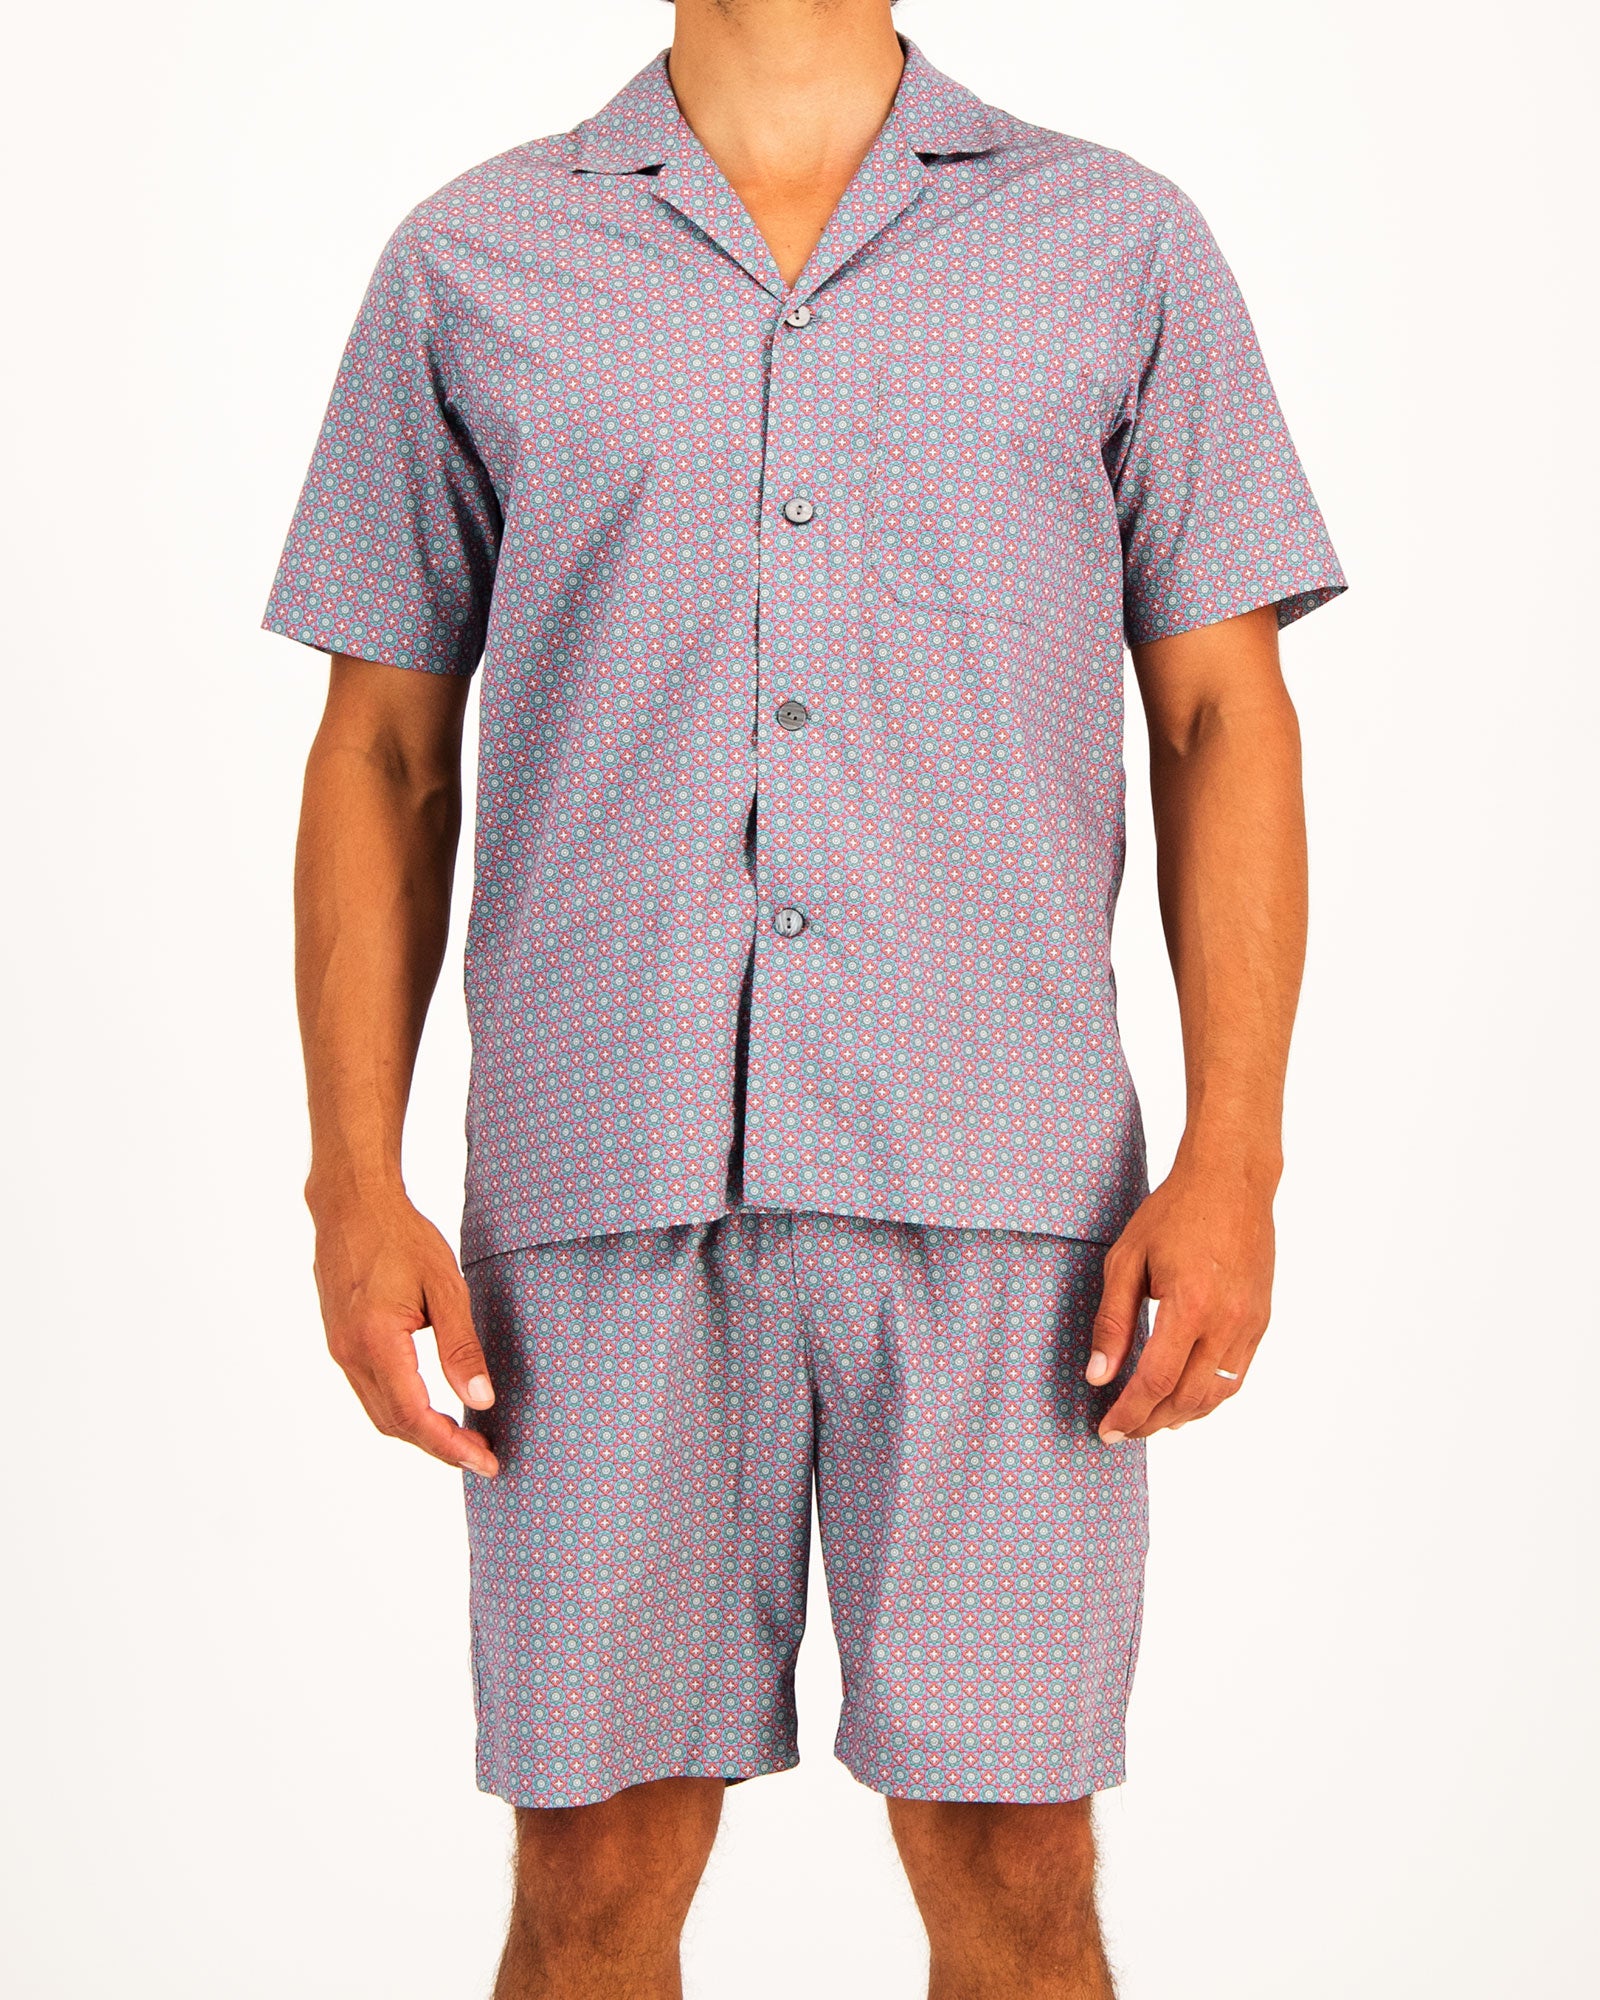 Buy Men's Short Pyjamas & PJ's | Woodstock Laundry - Woodstock Laundry UK